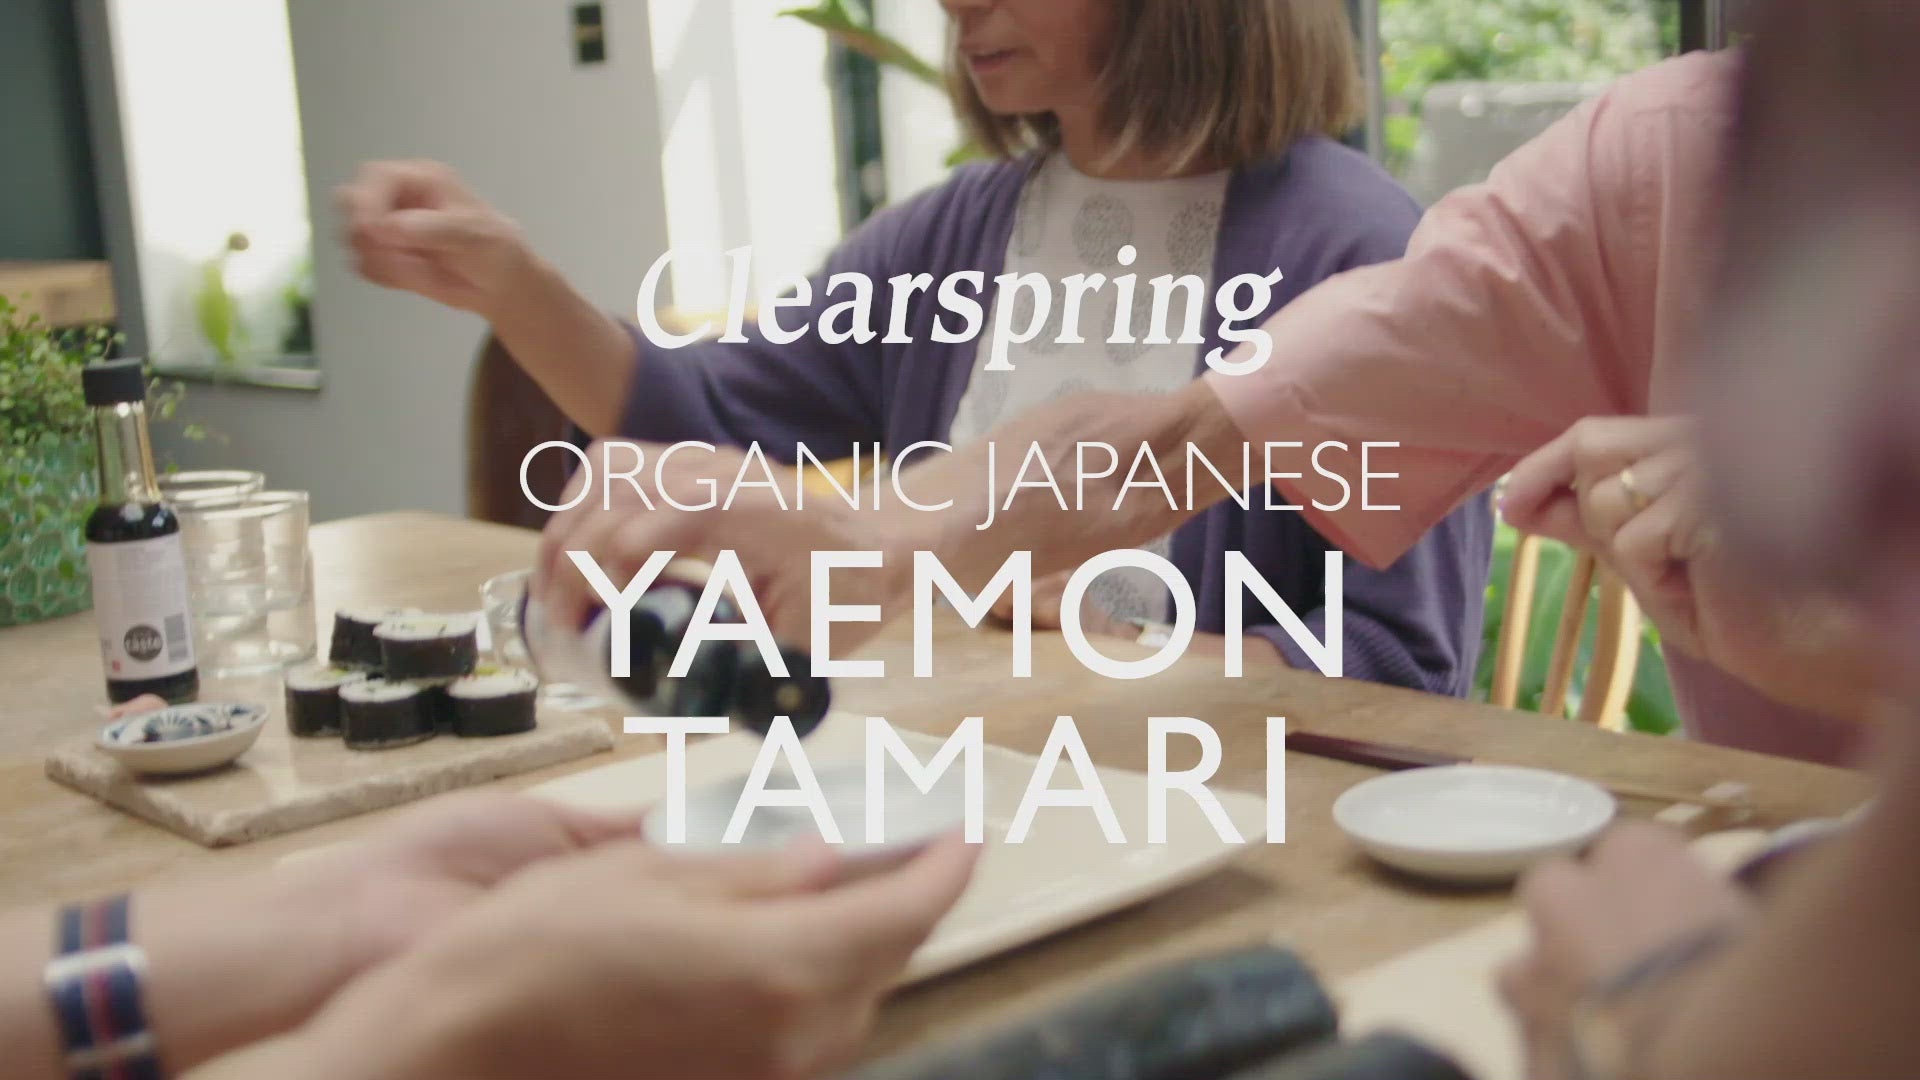 Clearspring Organic Japanese Yaemon Tamari Soya Sauce - Double